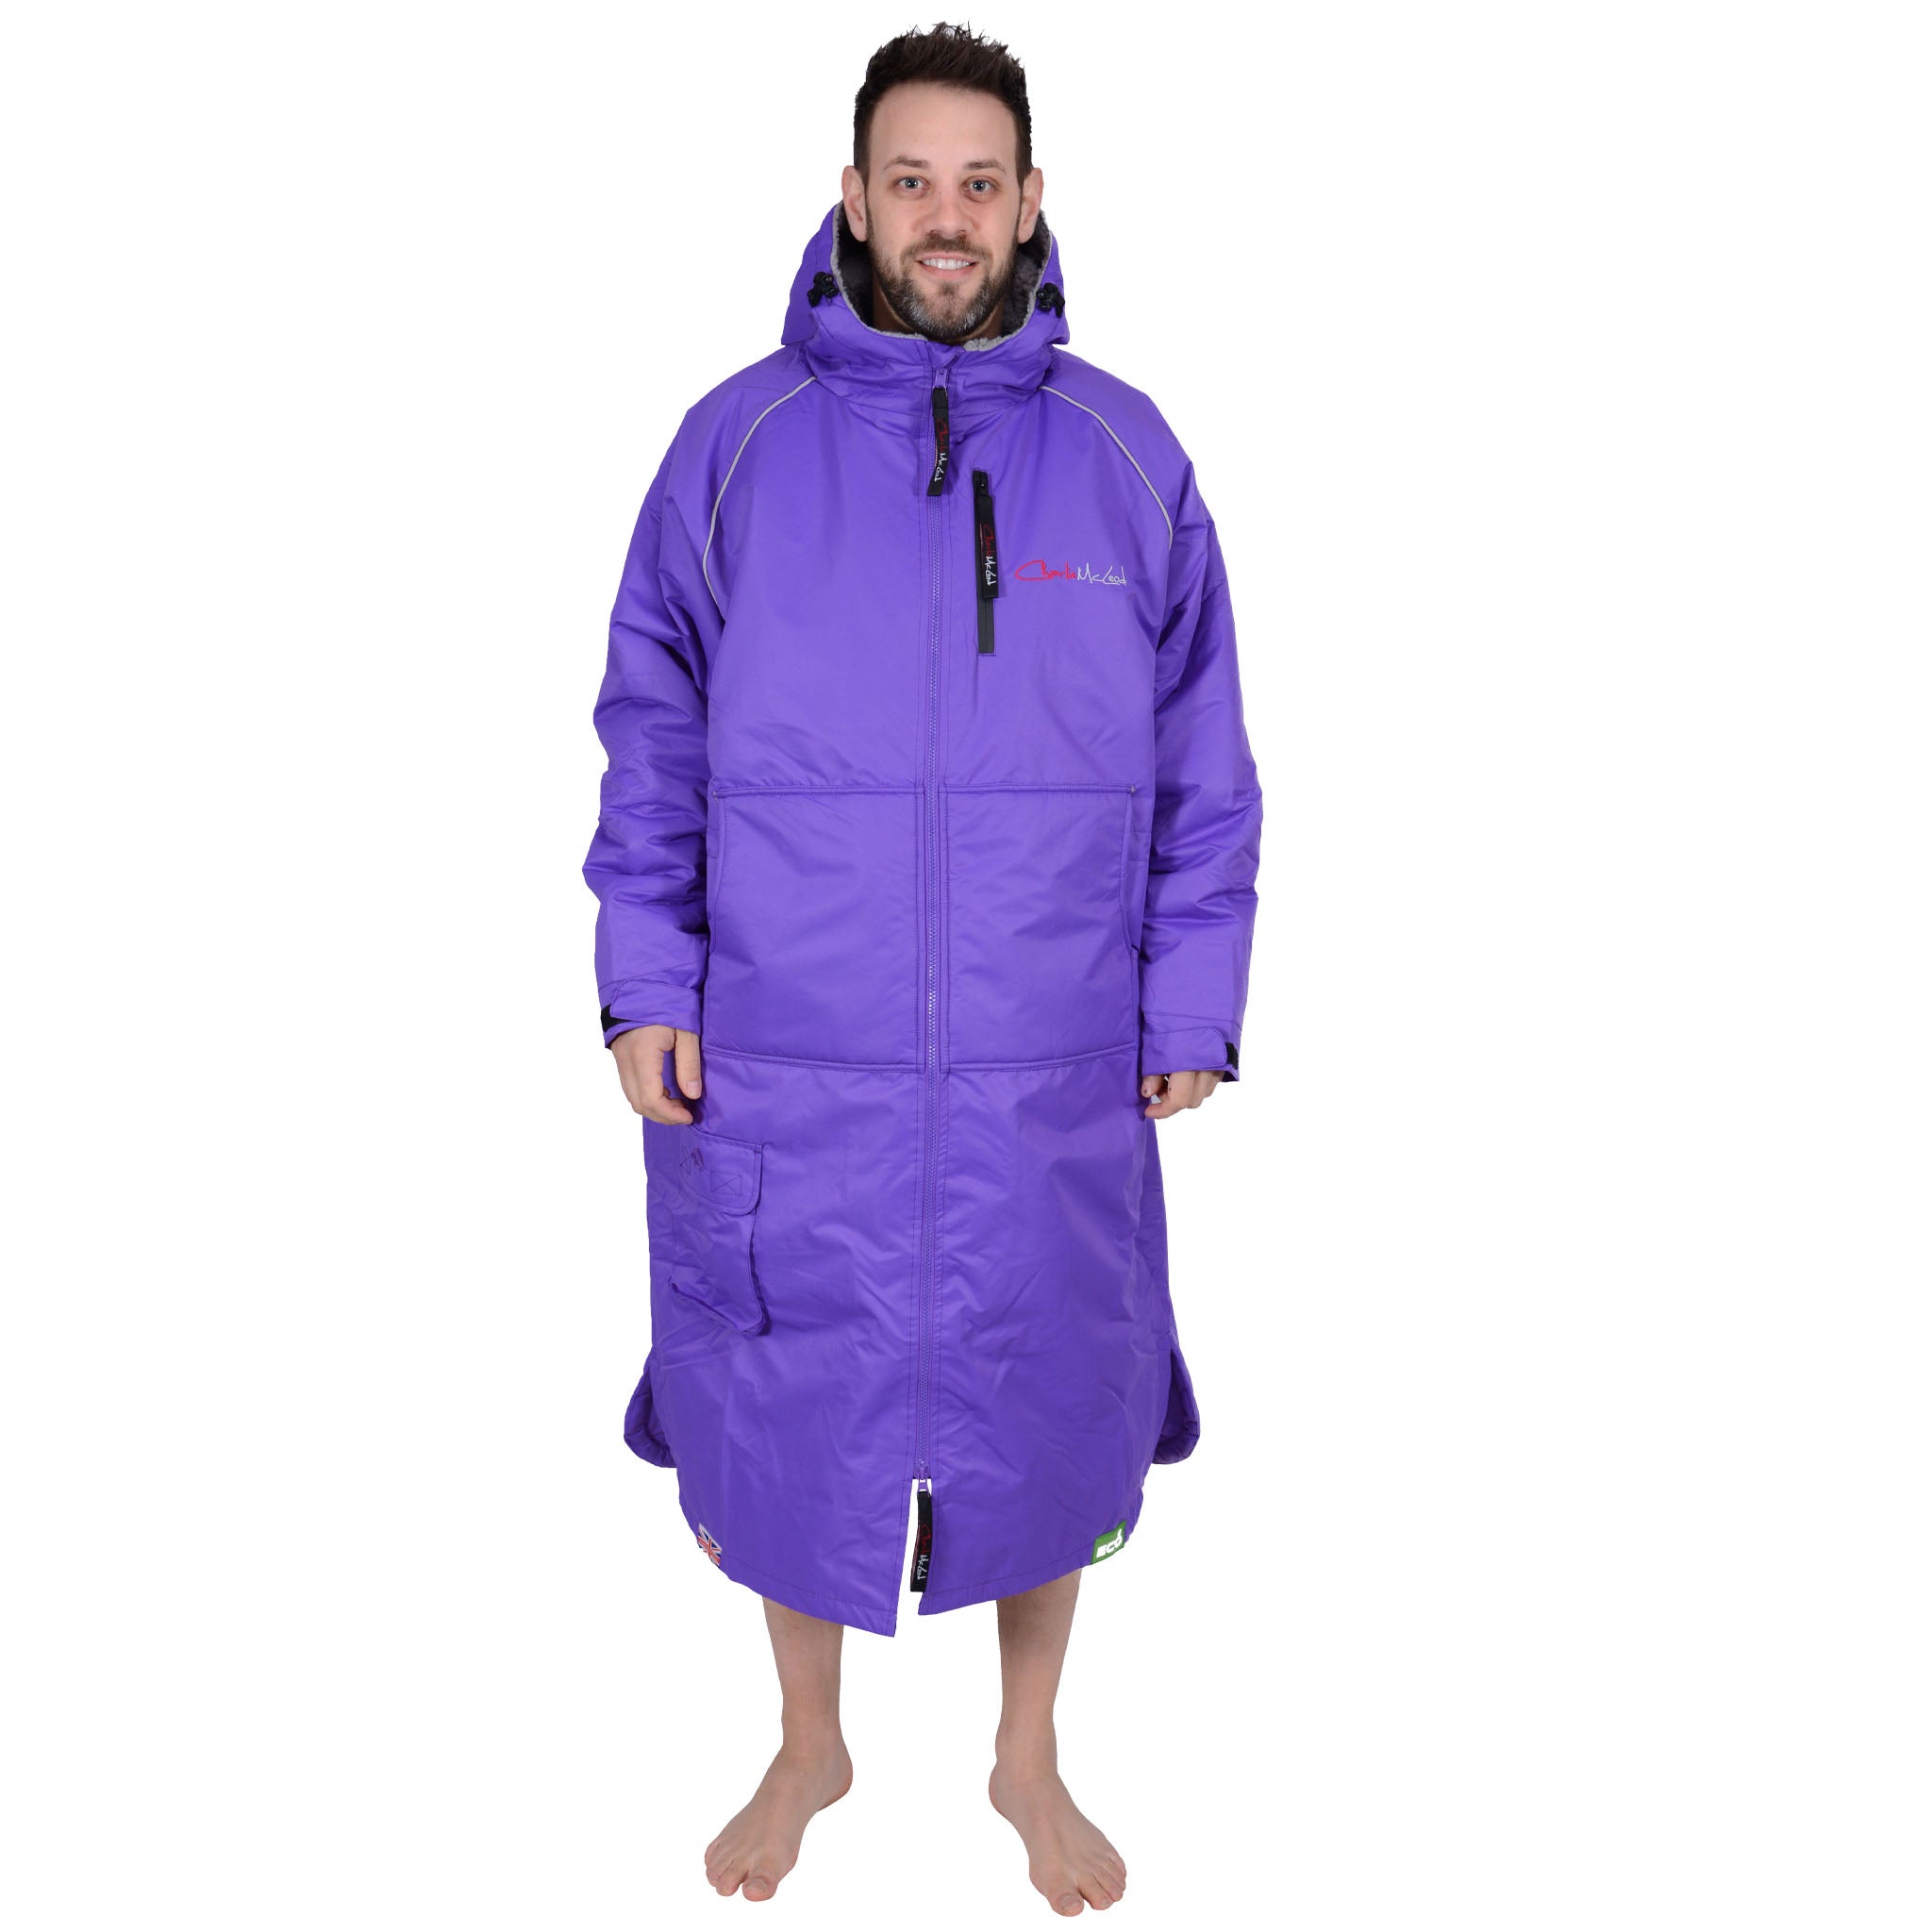 Charlie McLeod Eco Sports Cloak Long Sleeve Change Robe - Purple/Grey Front